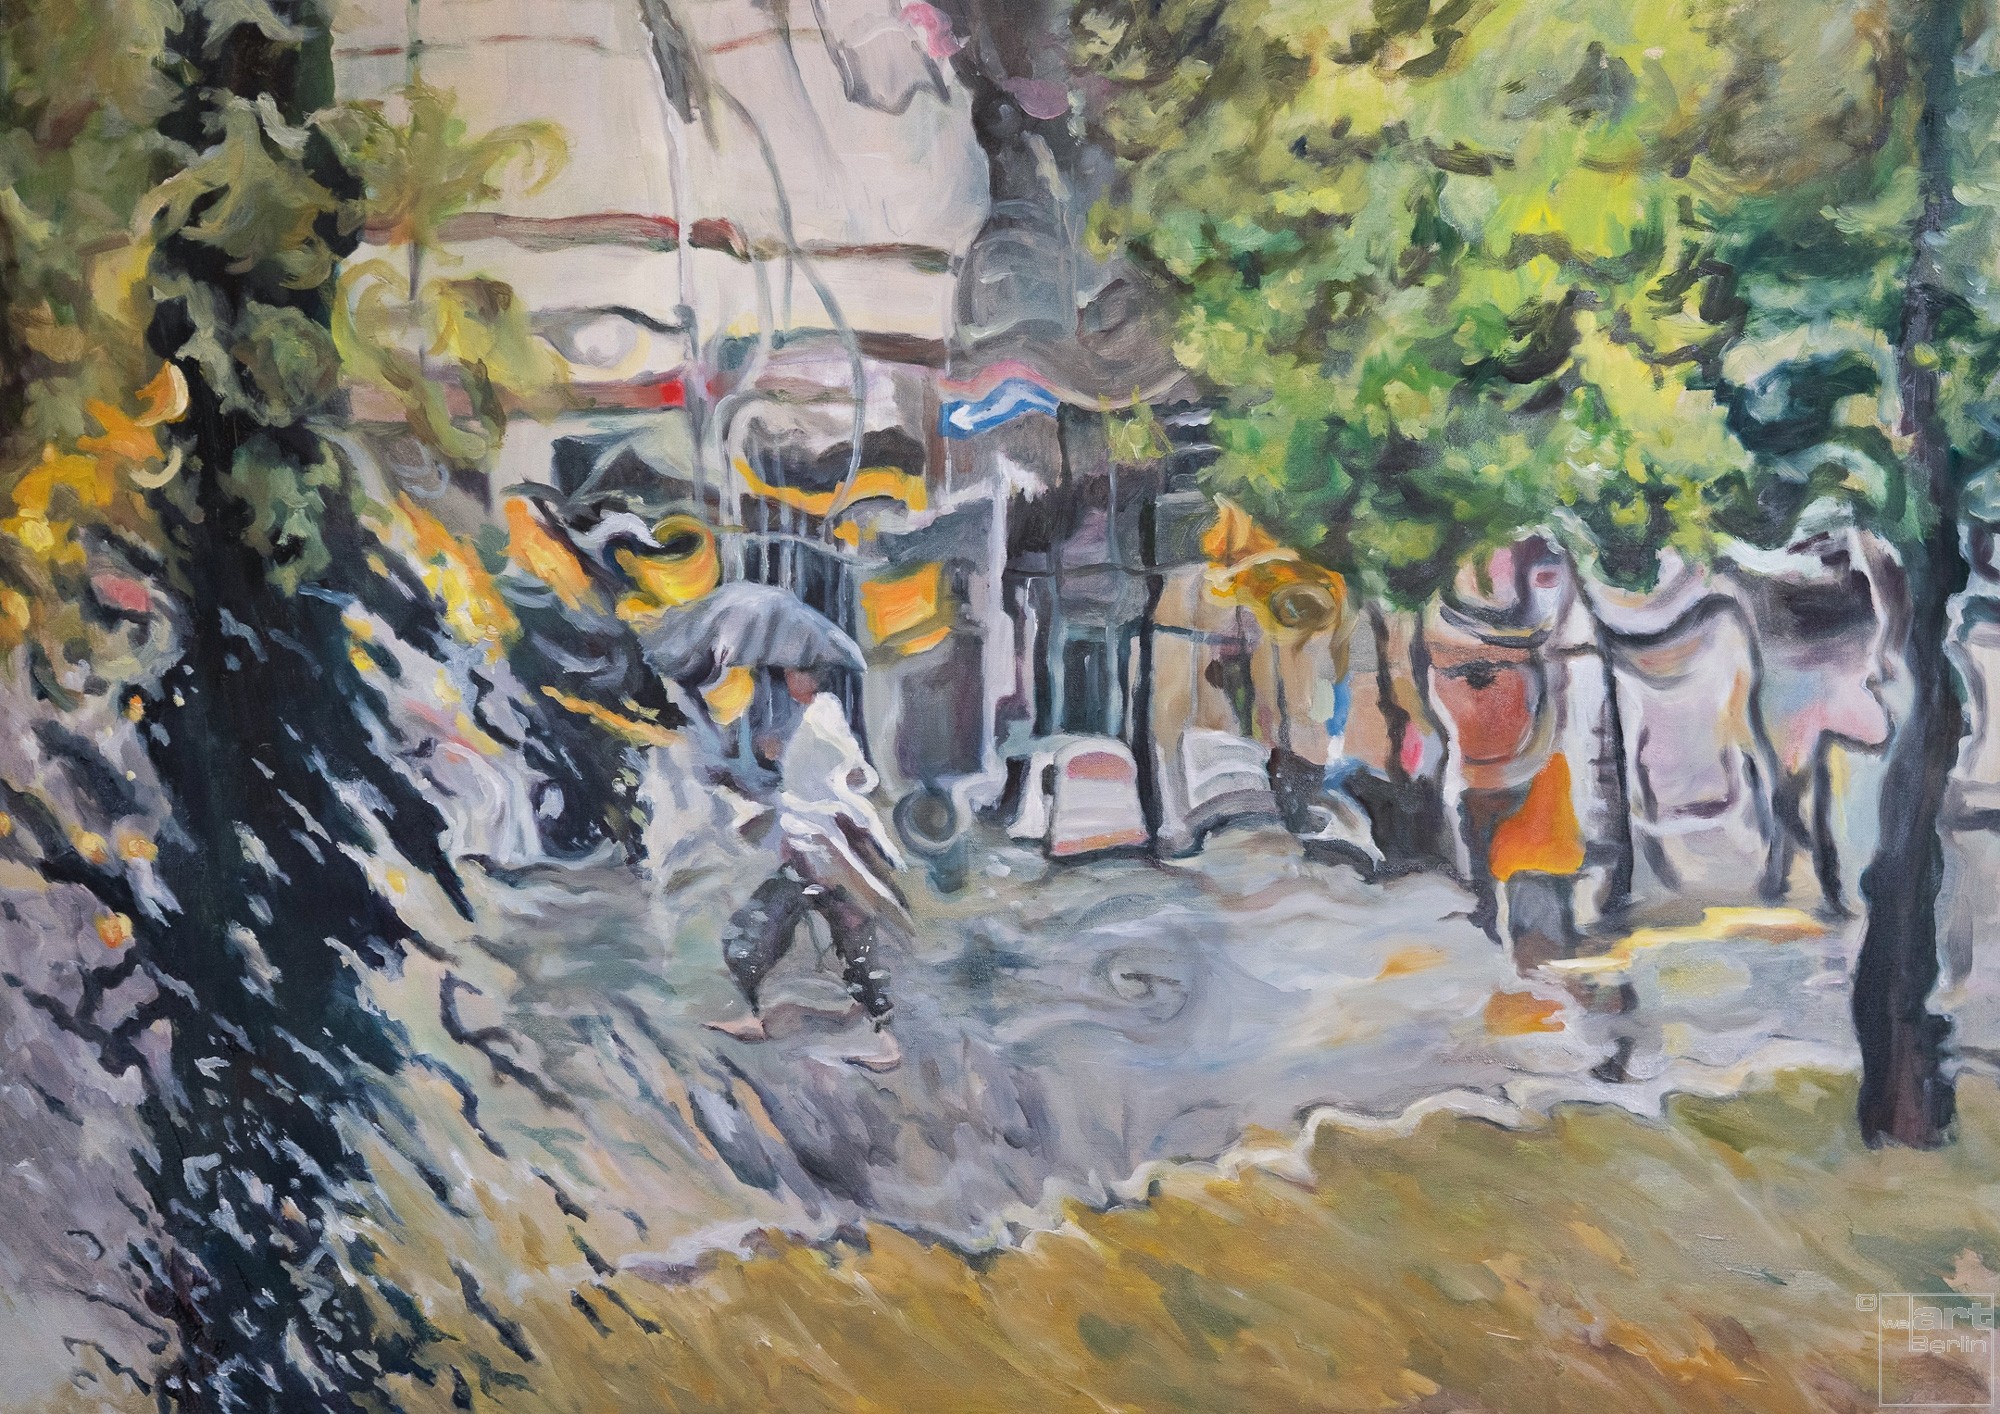 Rainfall I  | Malerei von Künstlerin Simone Westphal, Öl auf Leinwand